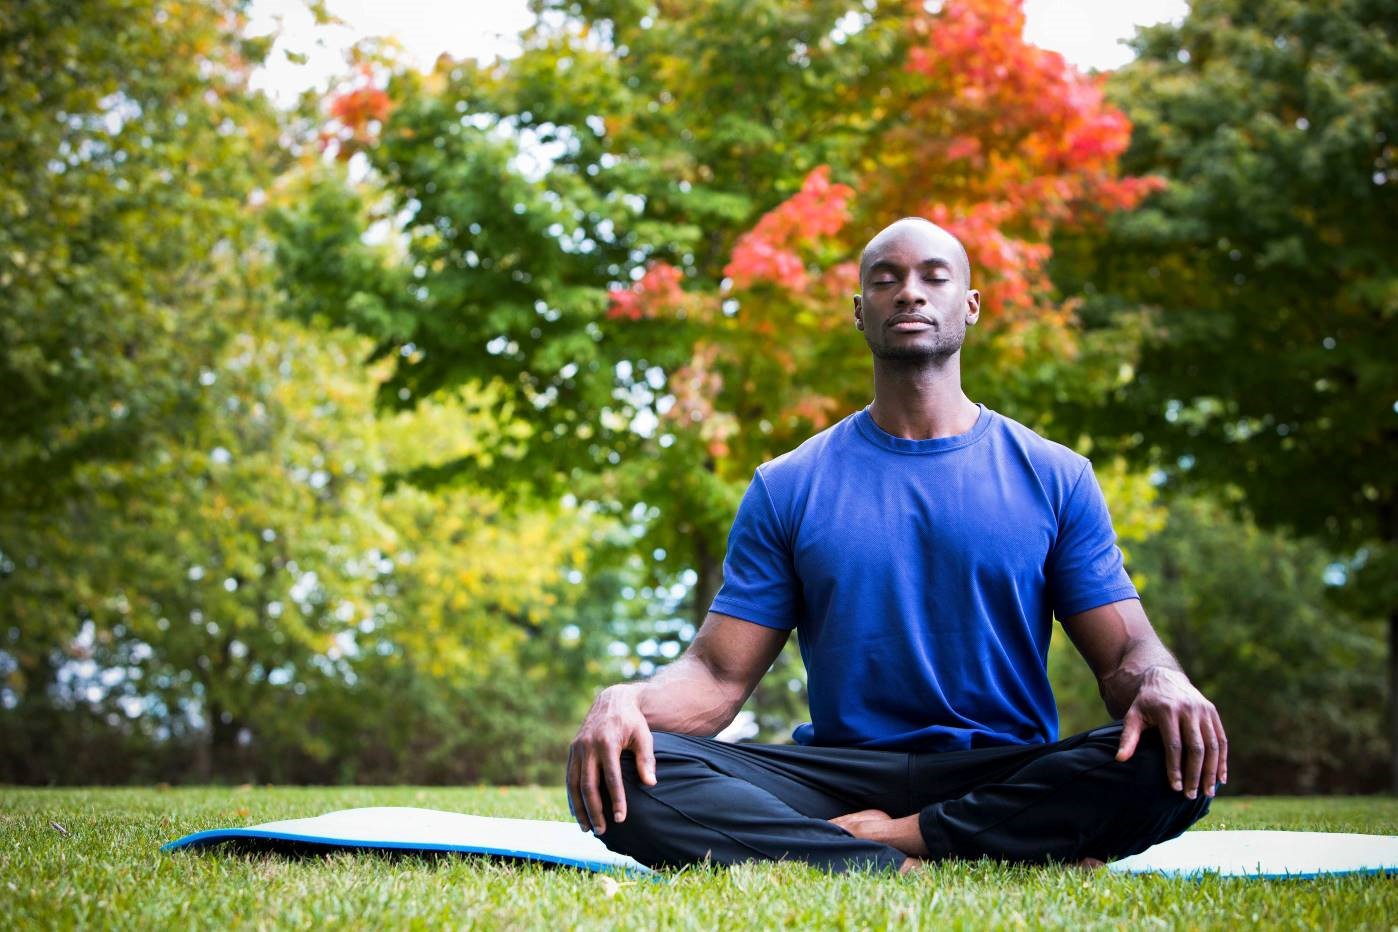 Man meditating on a yoga mat in a grassy field.